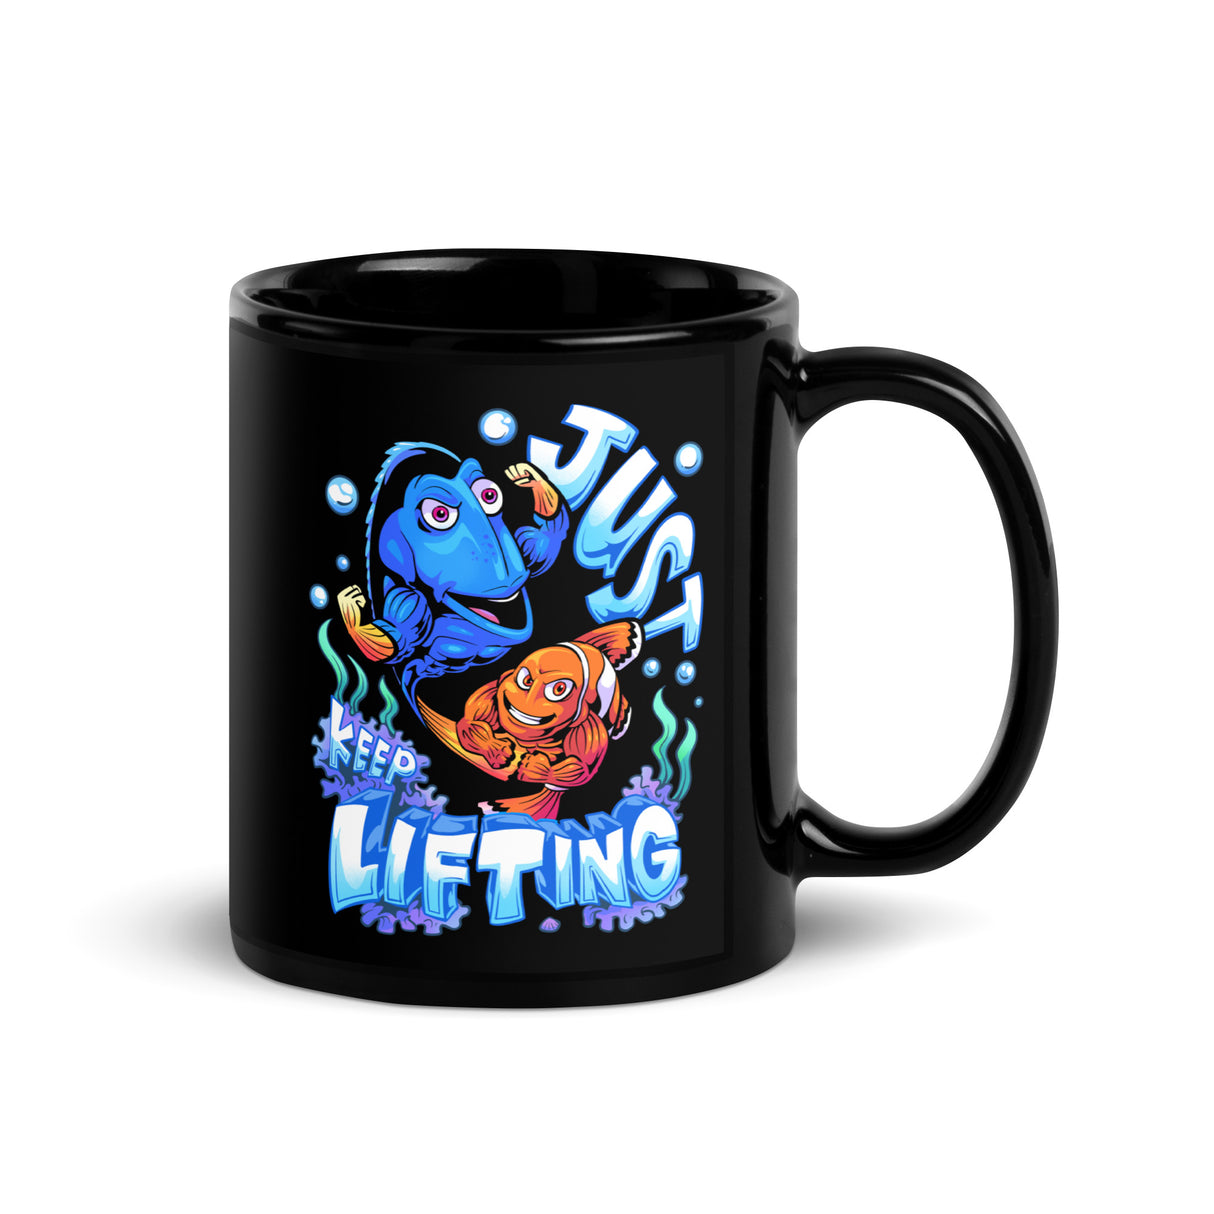 Just Keep Lifting Mug